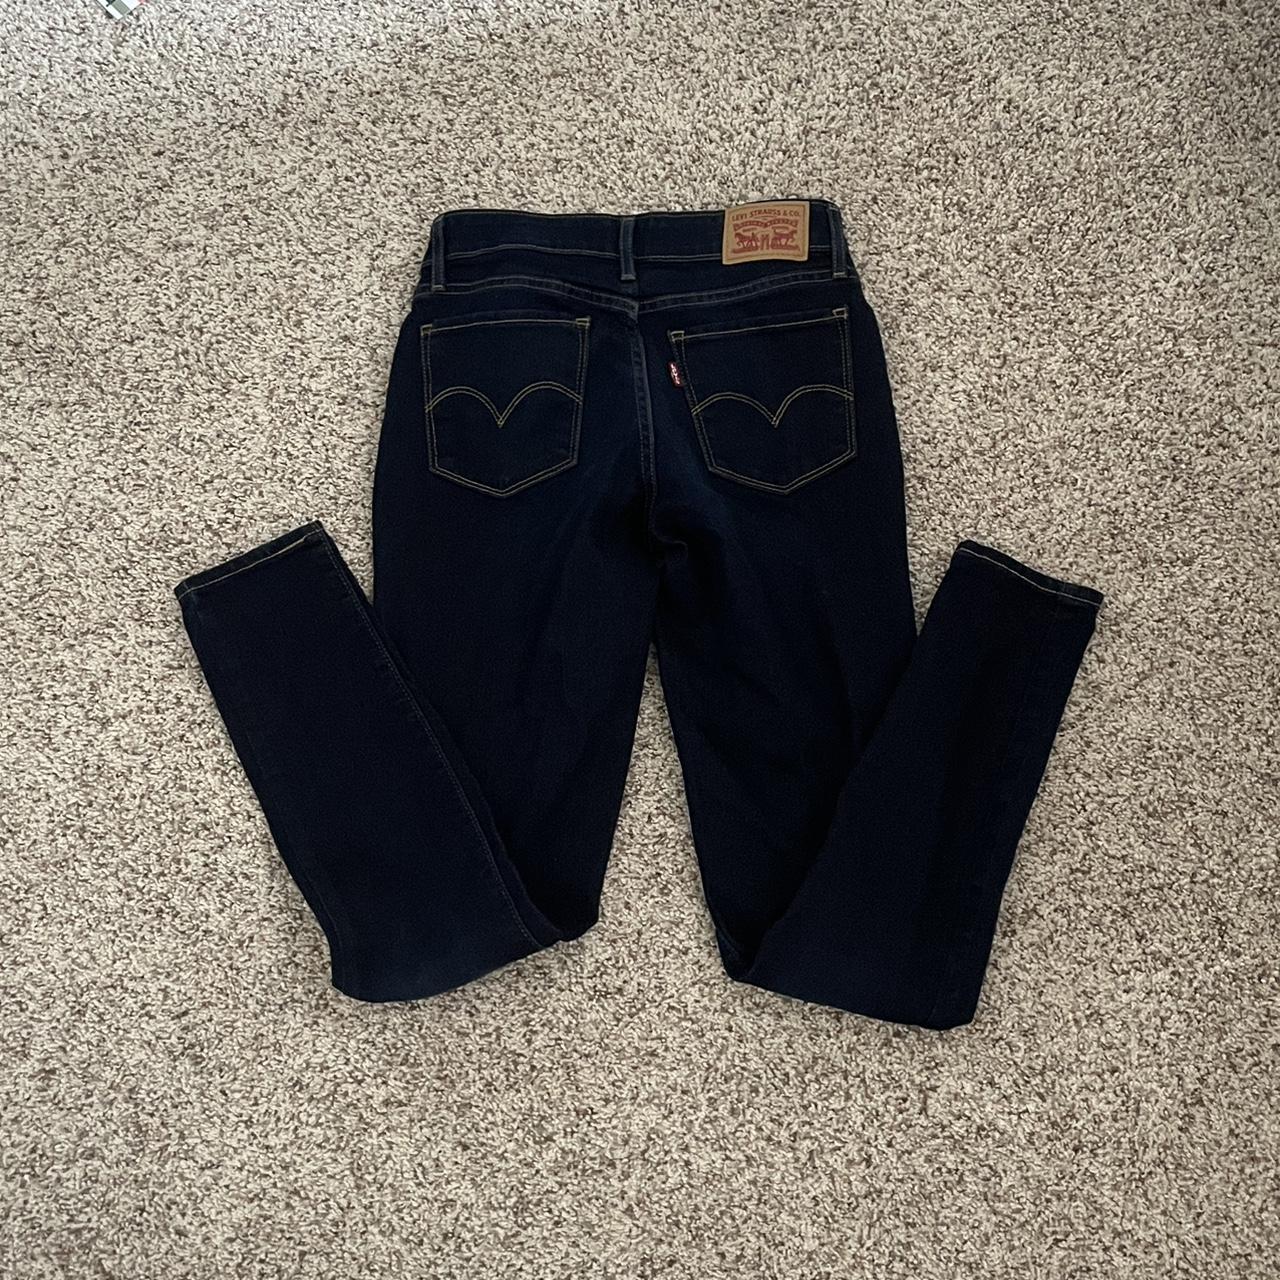 711 Levi’s Skinny Jeans Size 26 Super cute just dont... - Depop